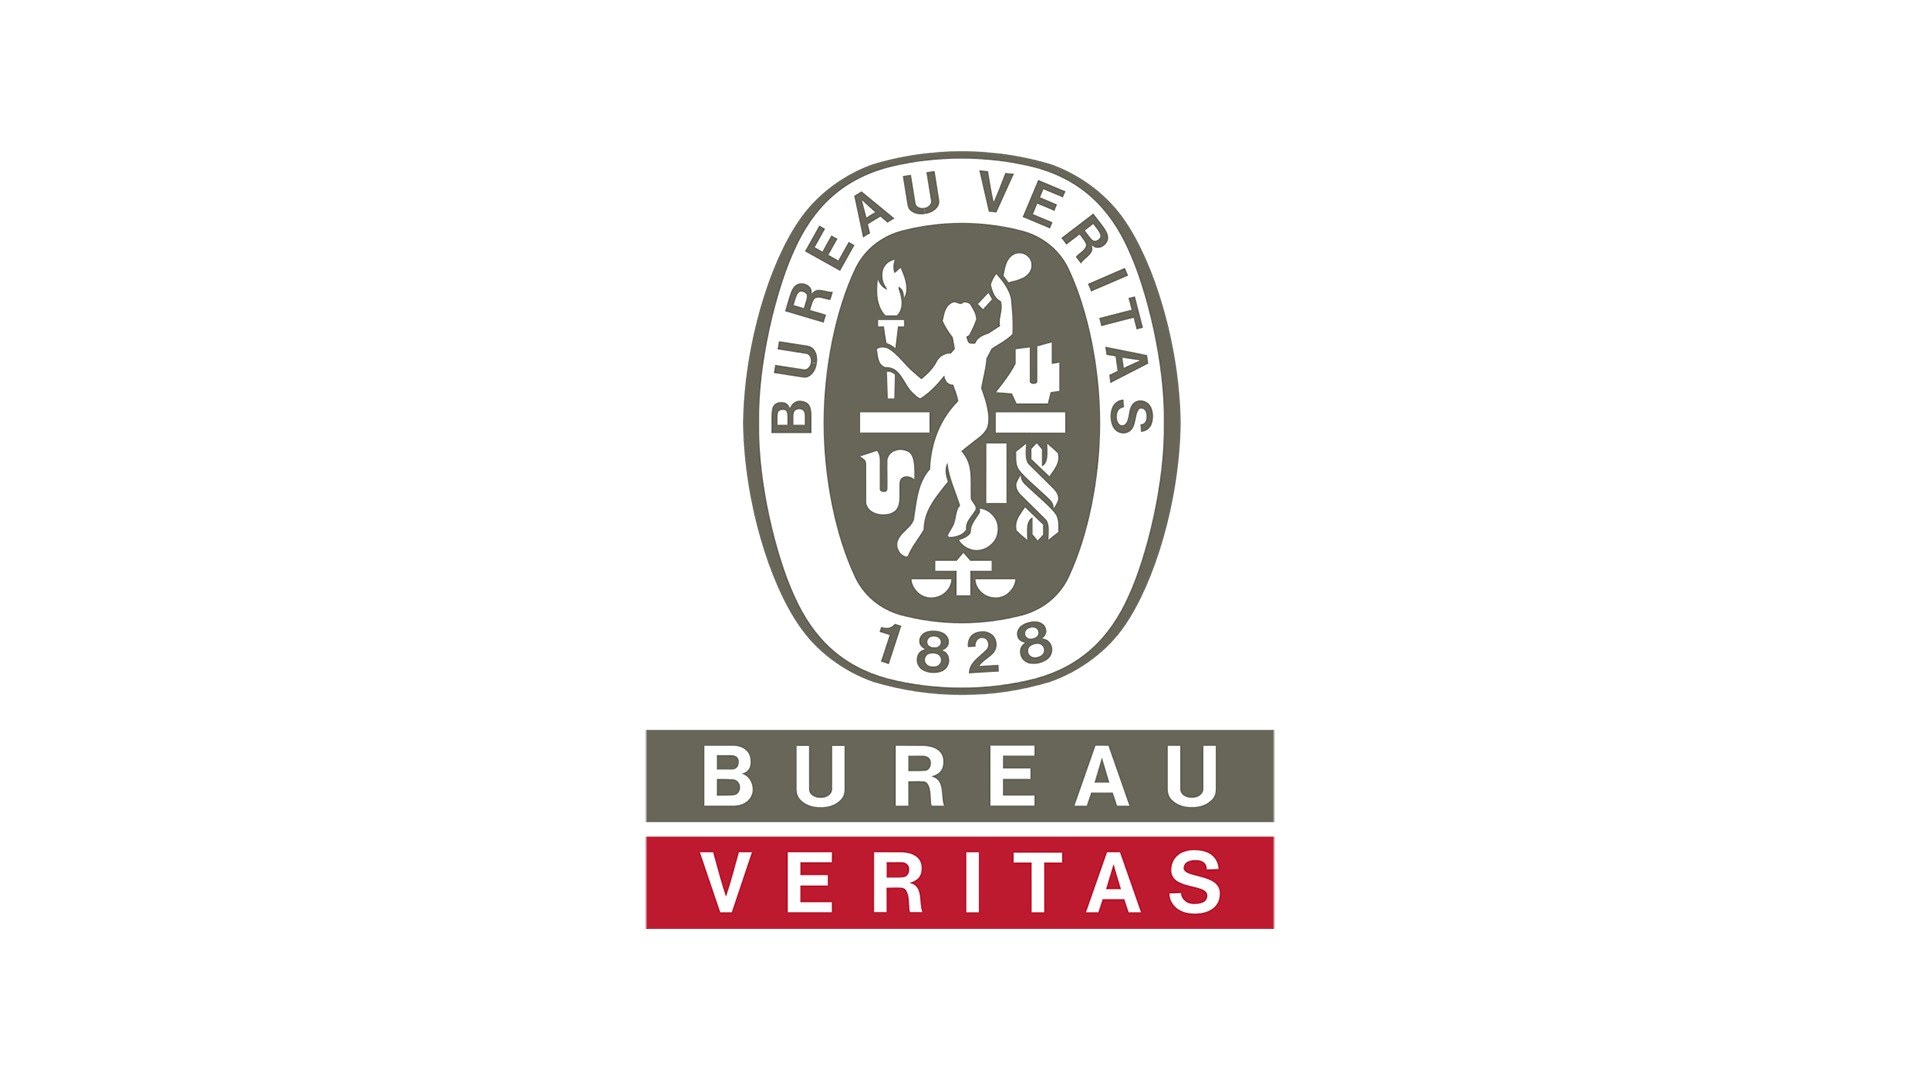 Veritas Logo - Bureau Veritas logo | Dwglogo